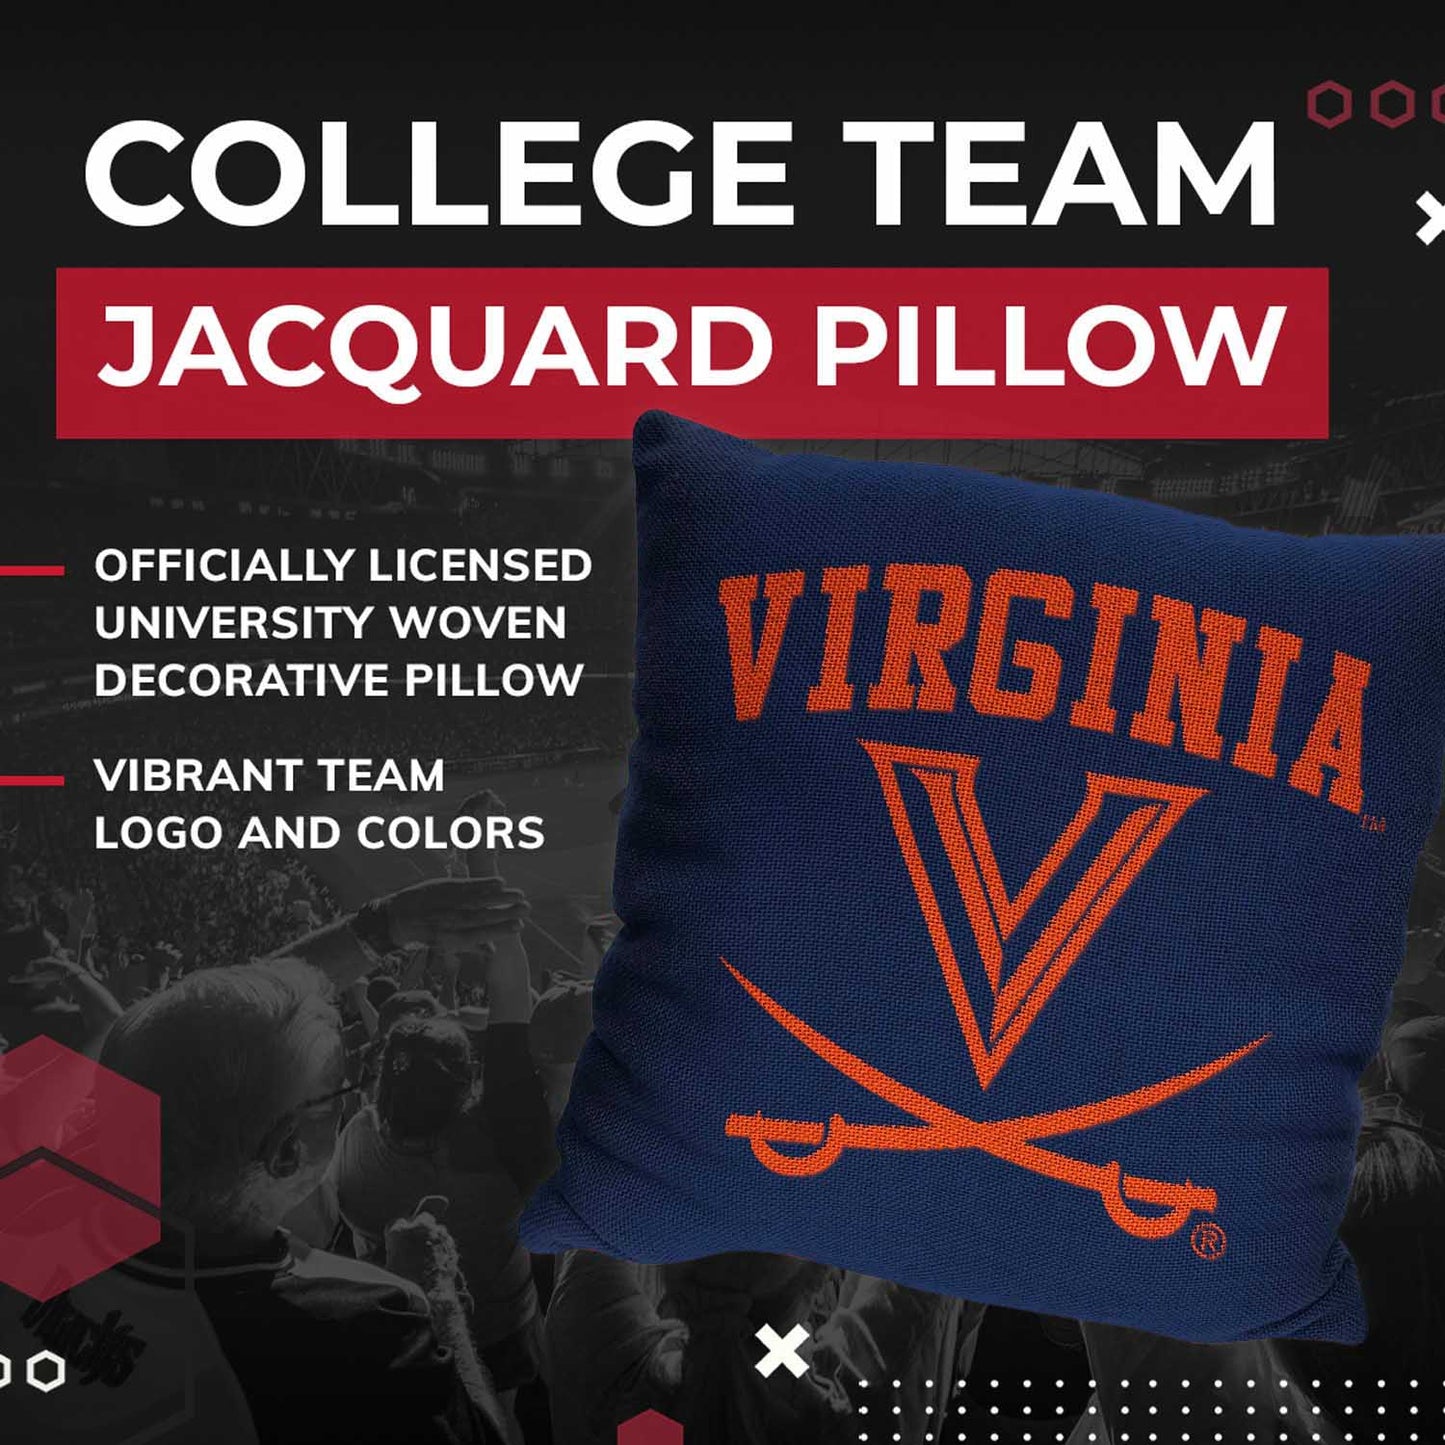 Virginia Cavaliers NCAA Decorative Pillow - Navy